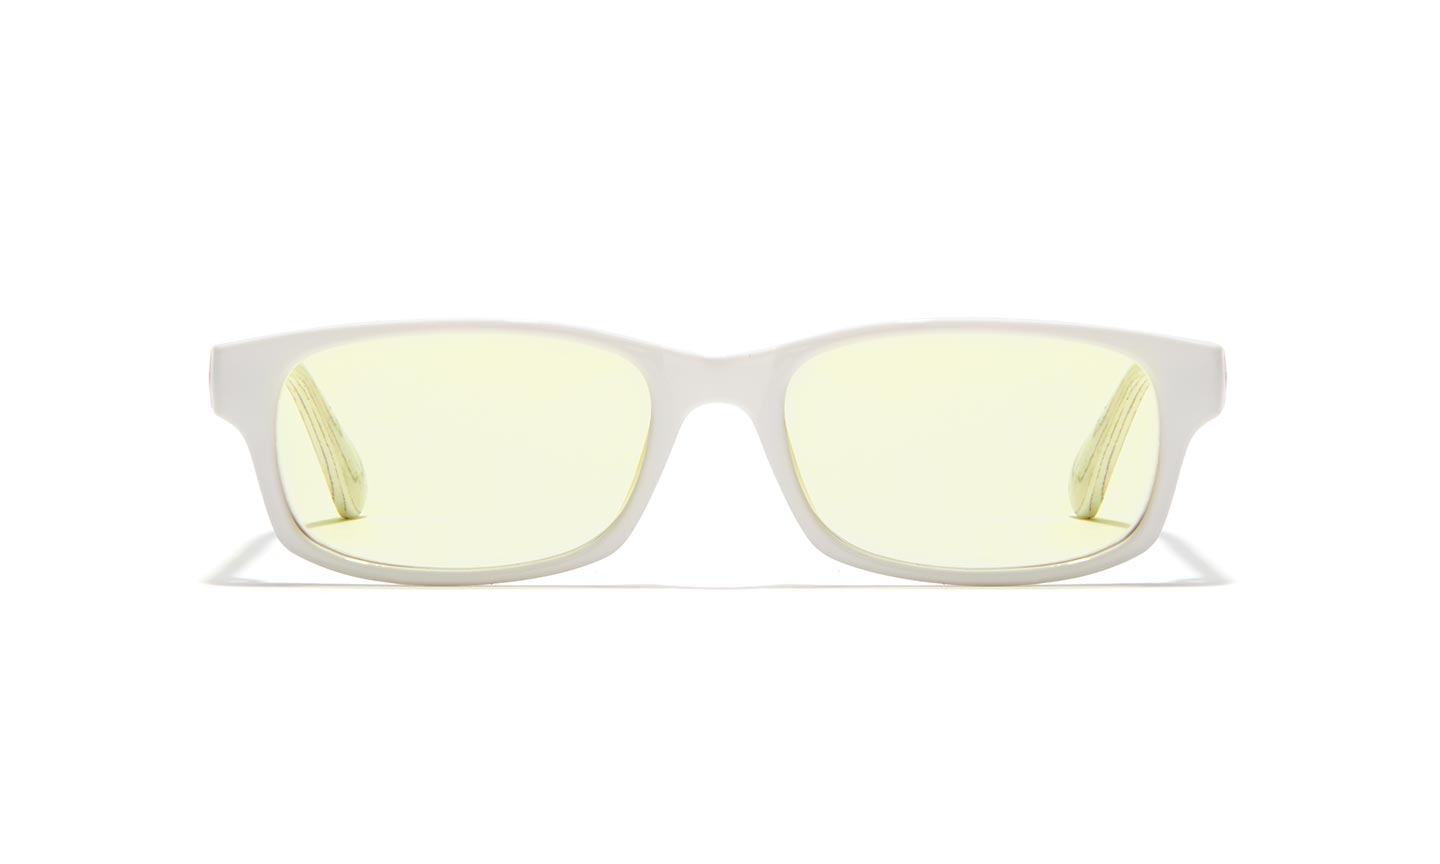 festival-yellow-glasses-122230